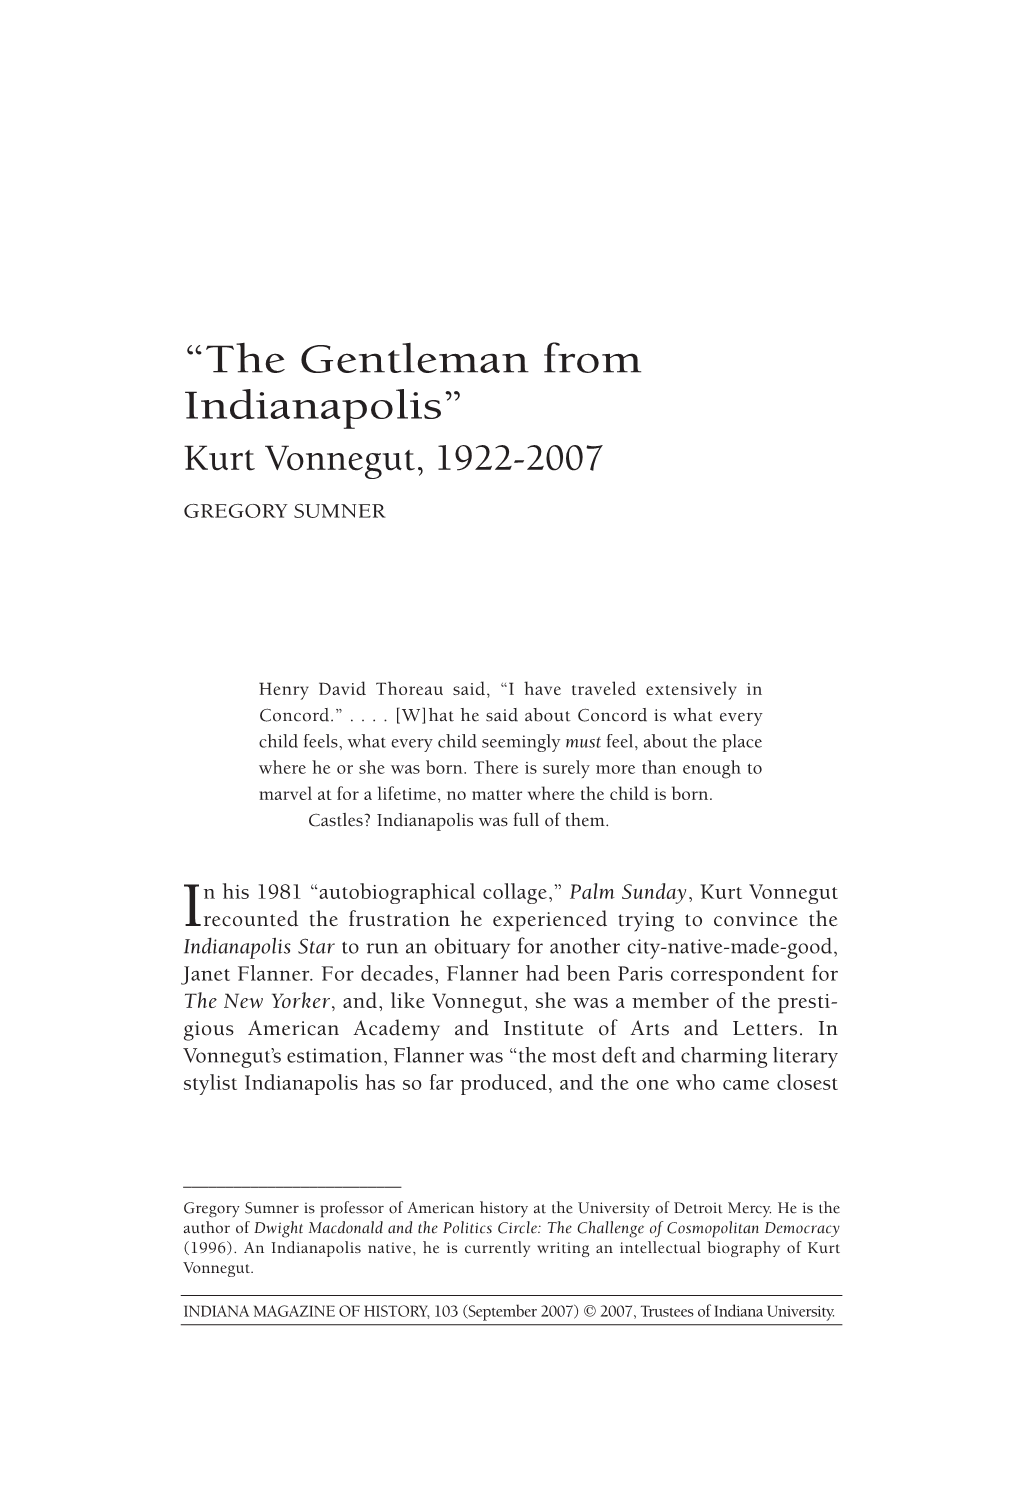 “The Gentleman from Indianapolis” Kurt Vonnegut, 1922-2007